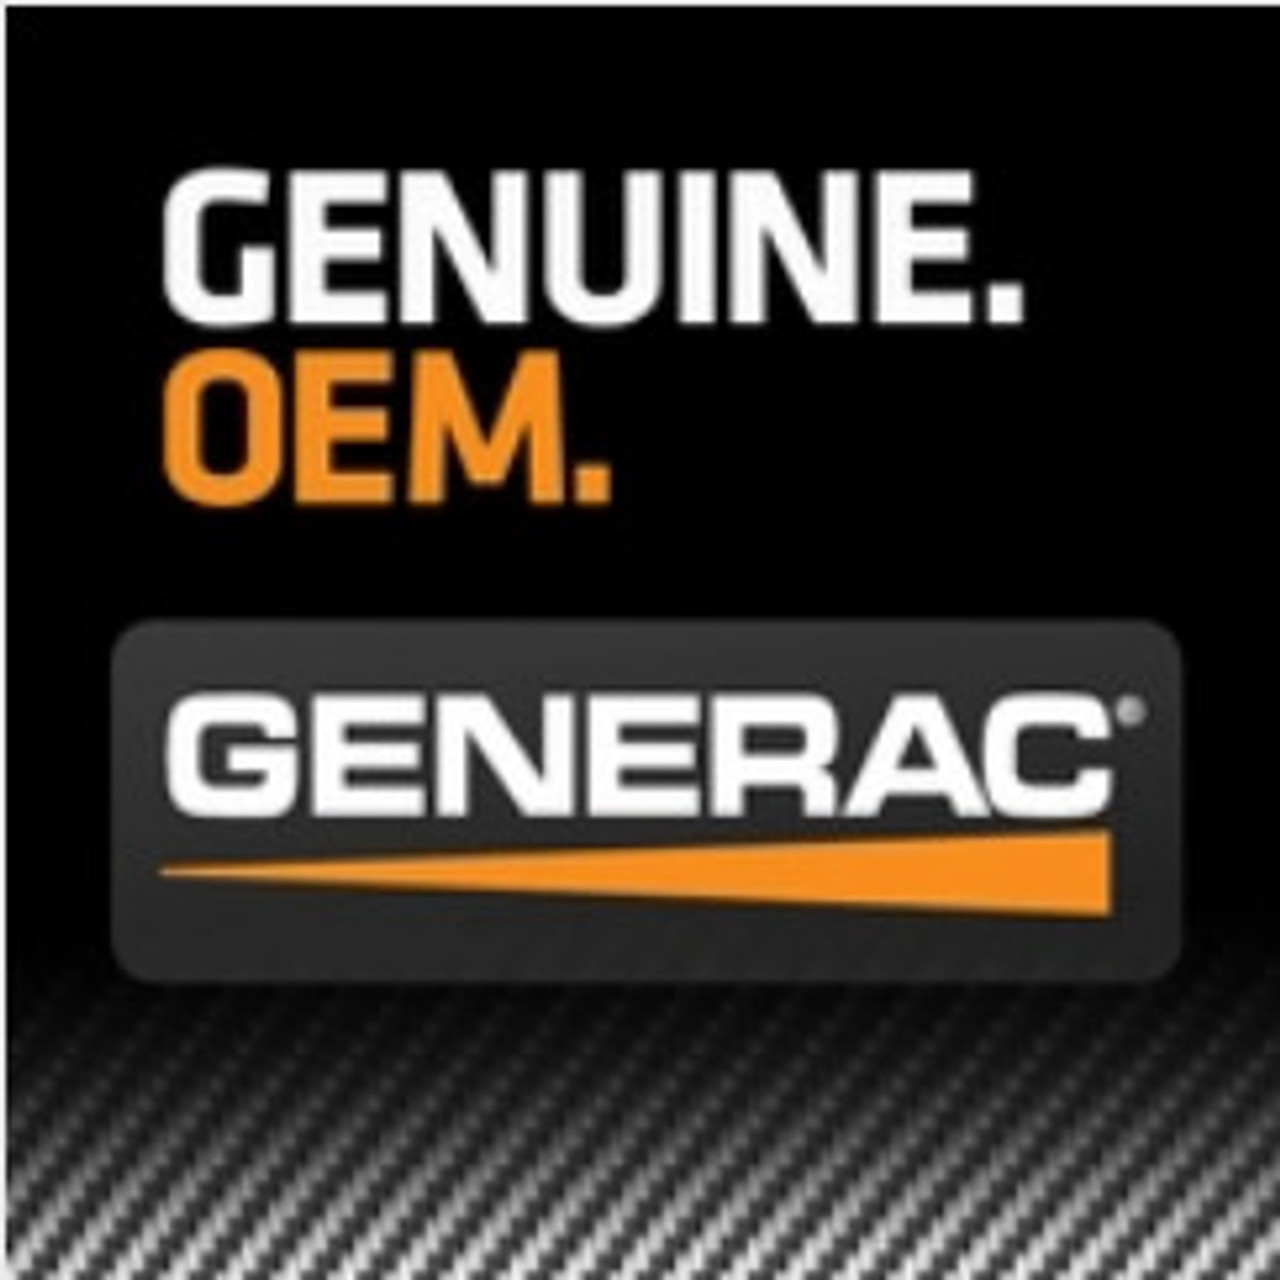 Generac OEM Parts Logo in Black and Orange